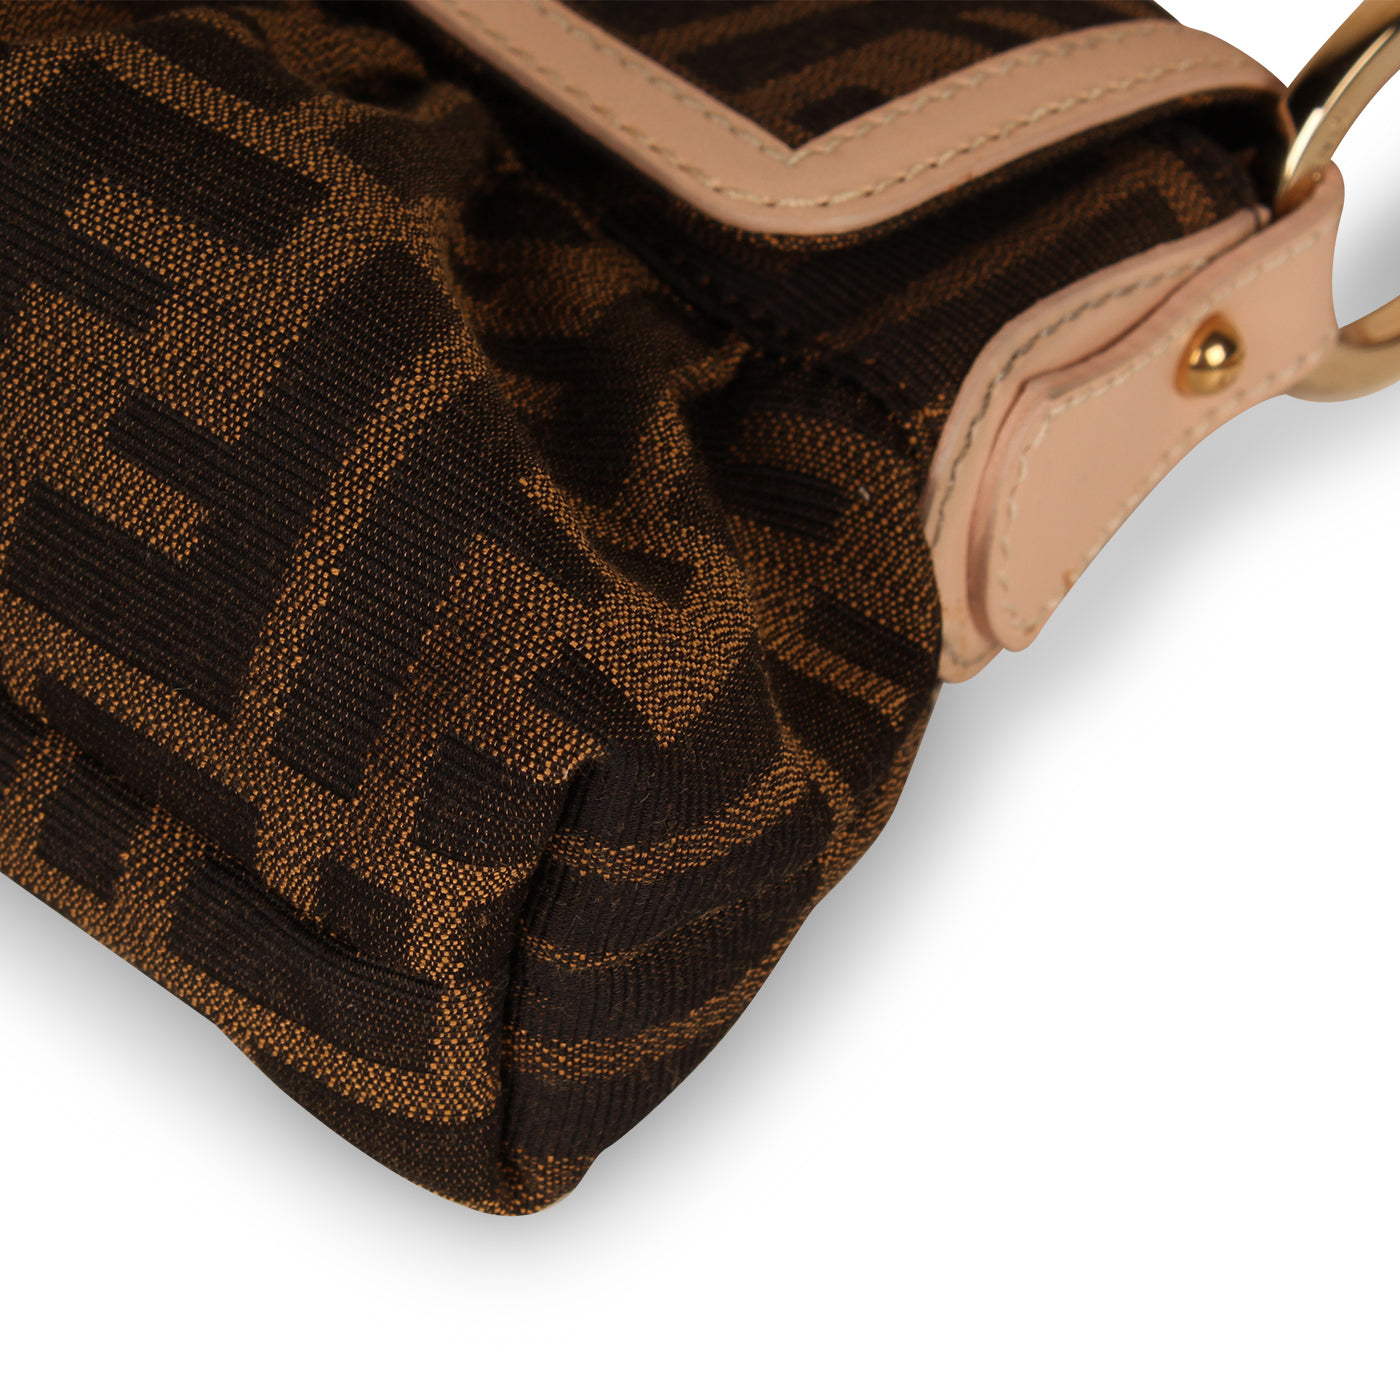 Personal Shop Request Fendi Underside Bag, New In Dustbag - Julia